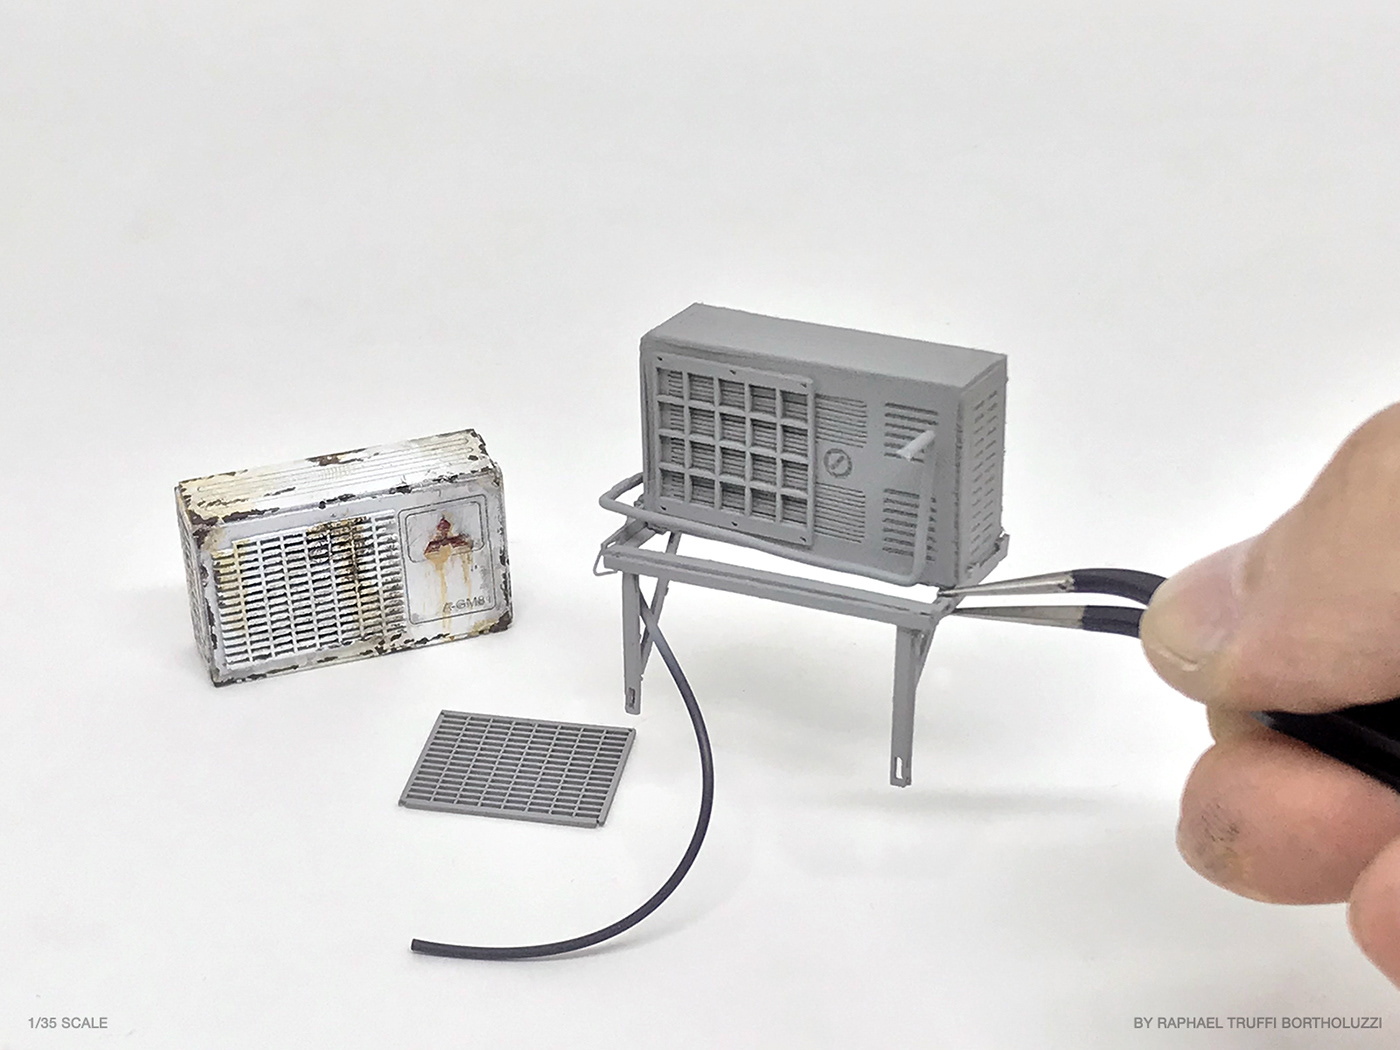 grandmondo crafts   Miniature handmade art paper sculpture creative Tiny Diorama